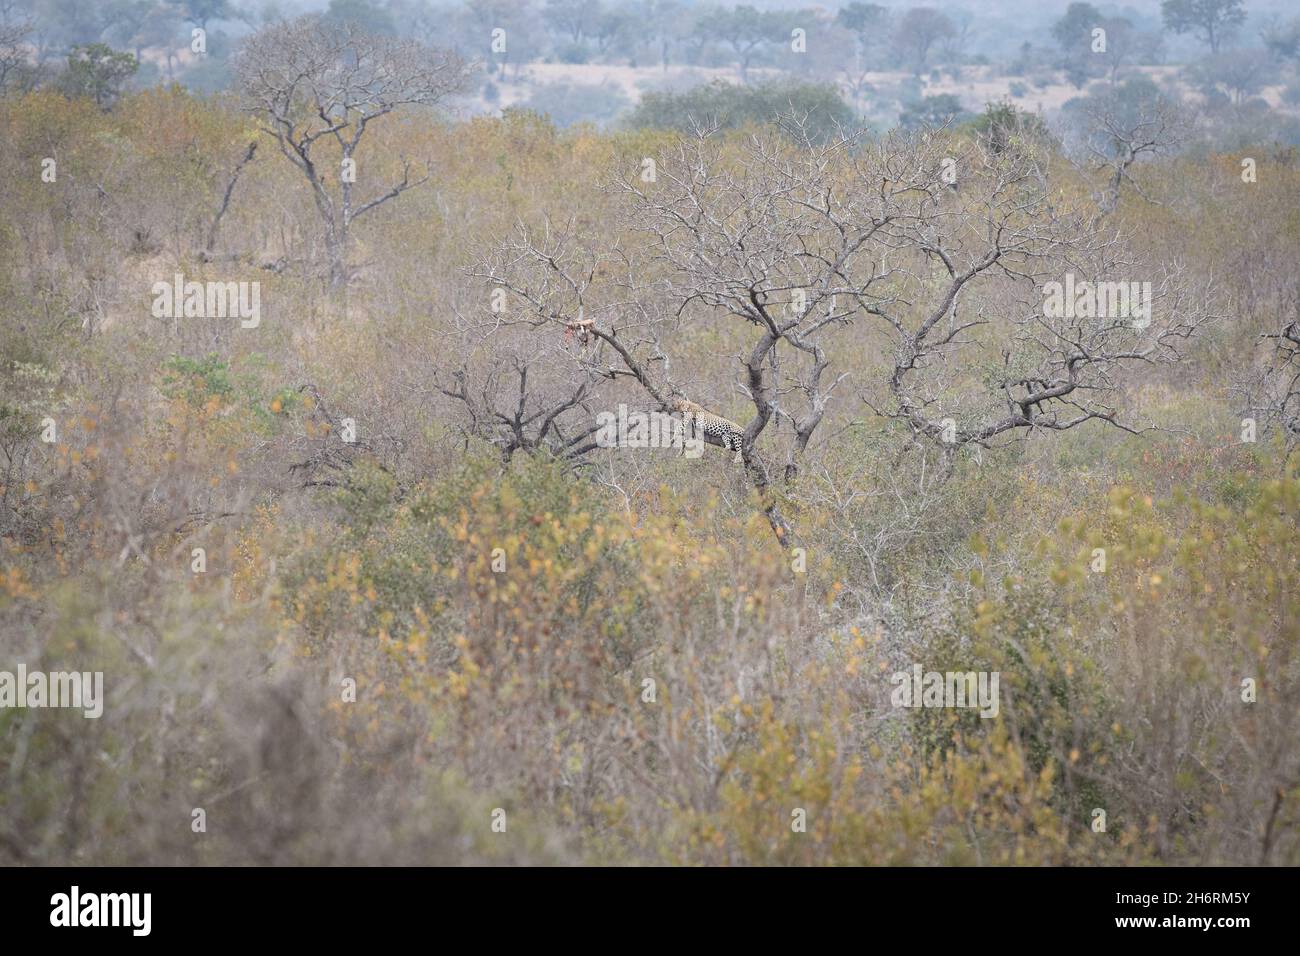 Landscape with Gum arabic trees, Acacia senegal Stock Photo